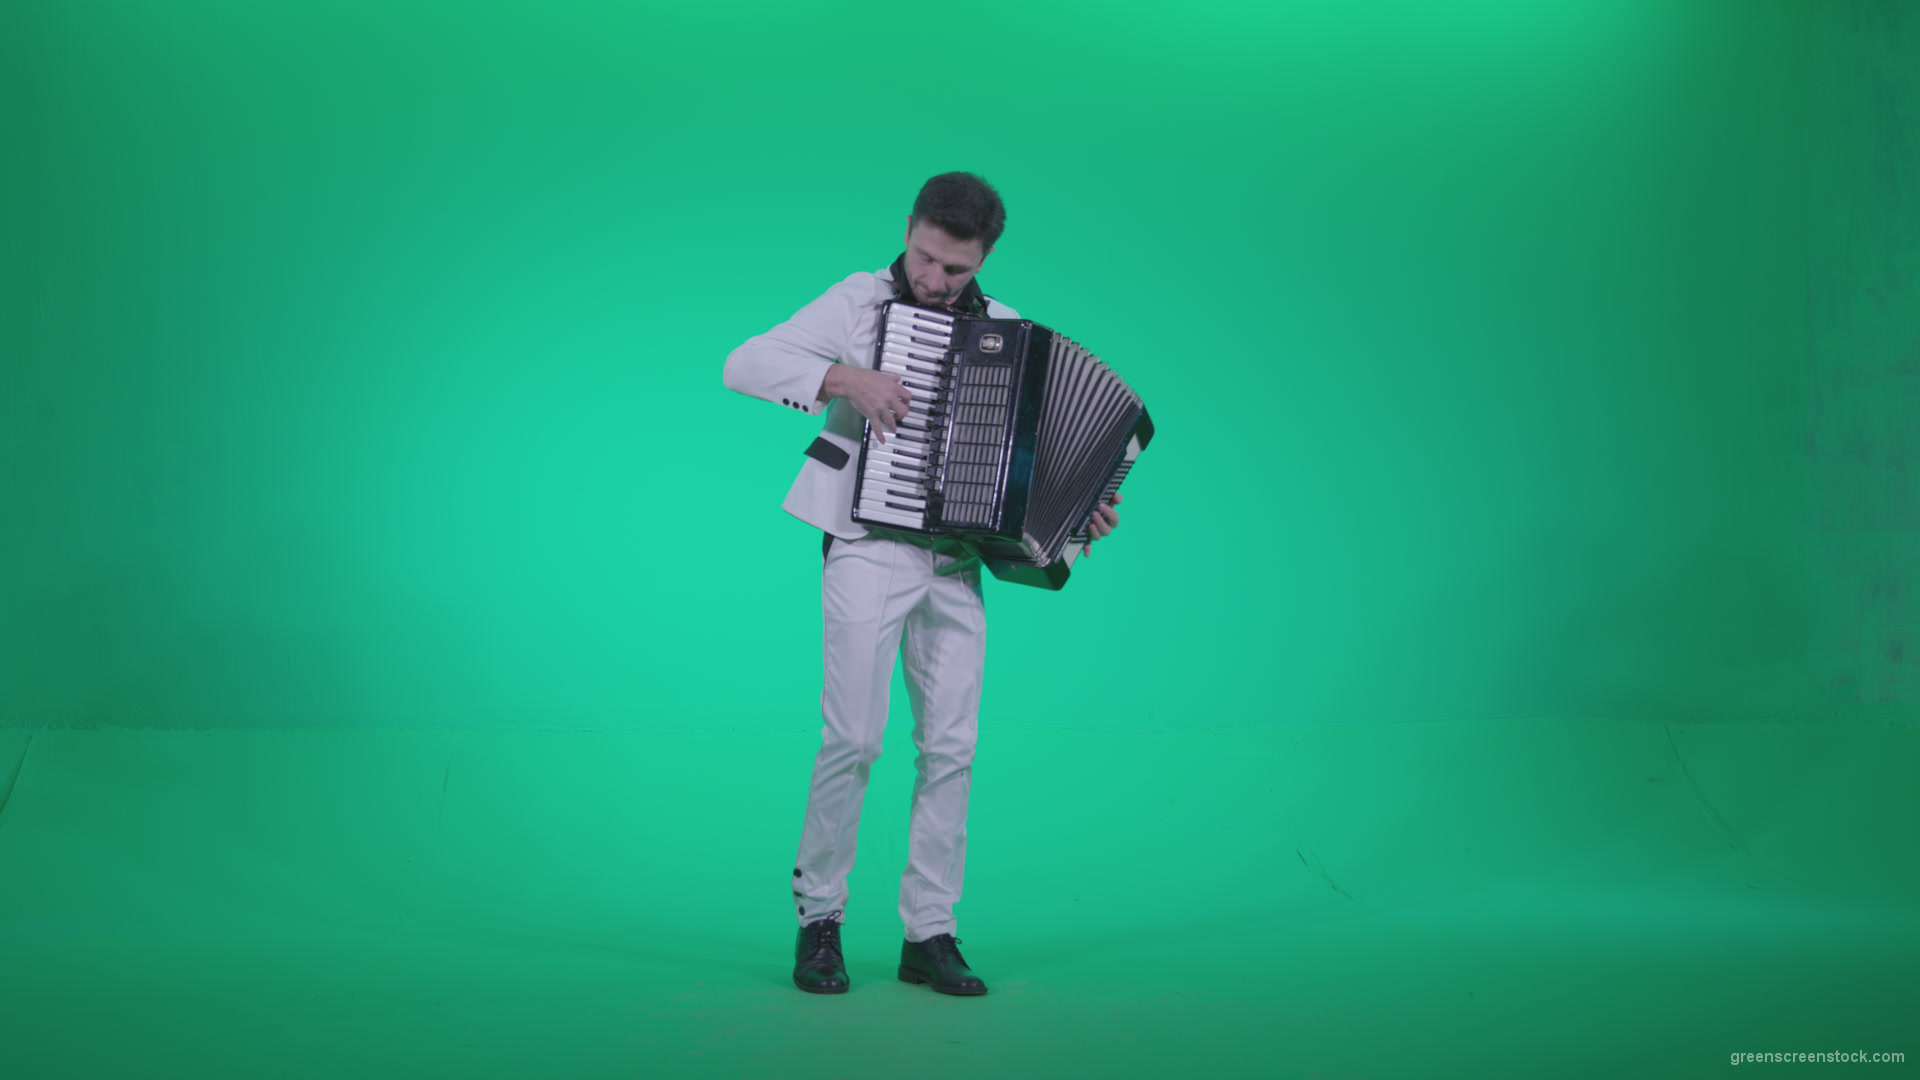 Black-Accordion-Virtuoso-performs-ba10-Green-Screen-Video-Footage_004 Green Screen Stock